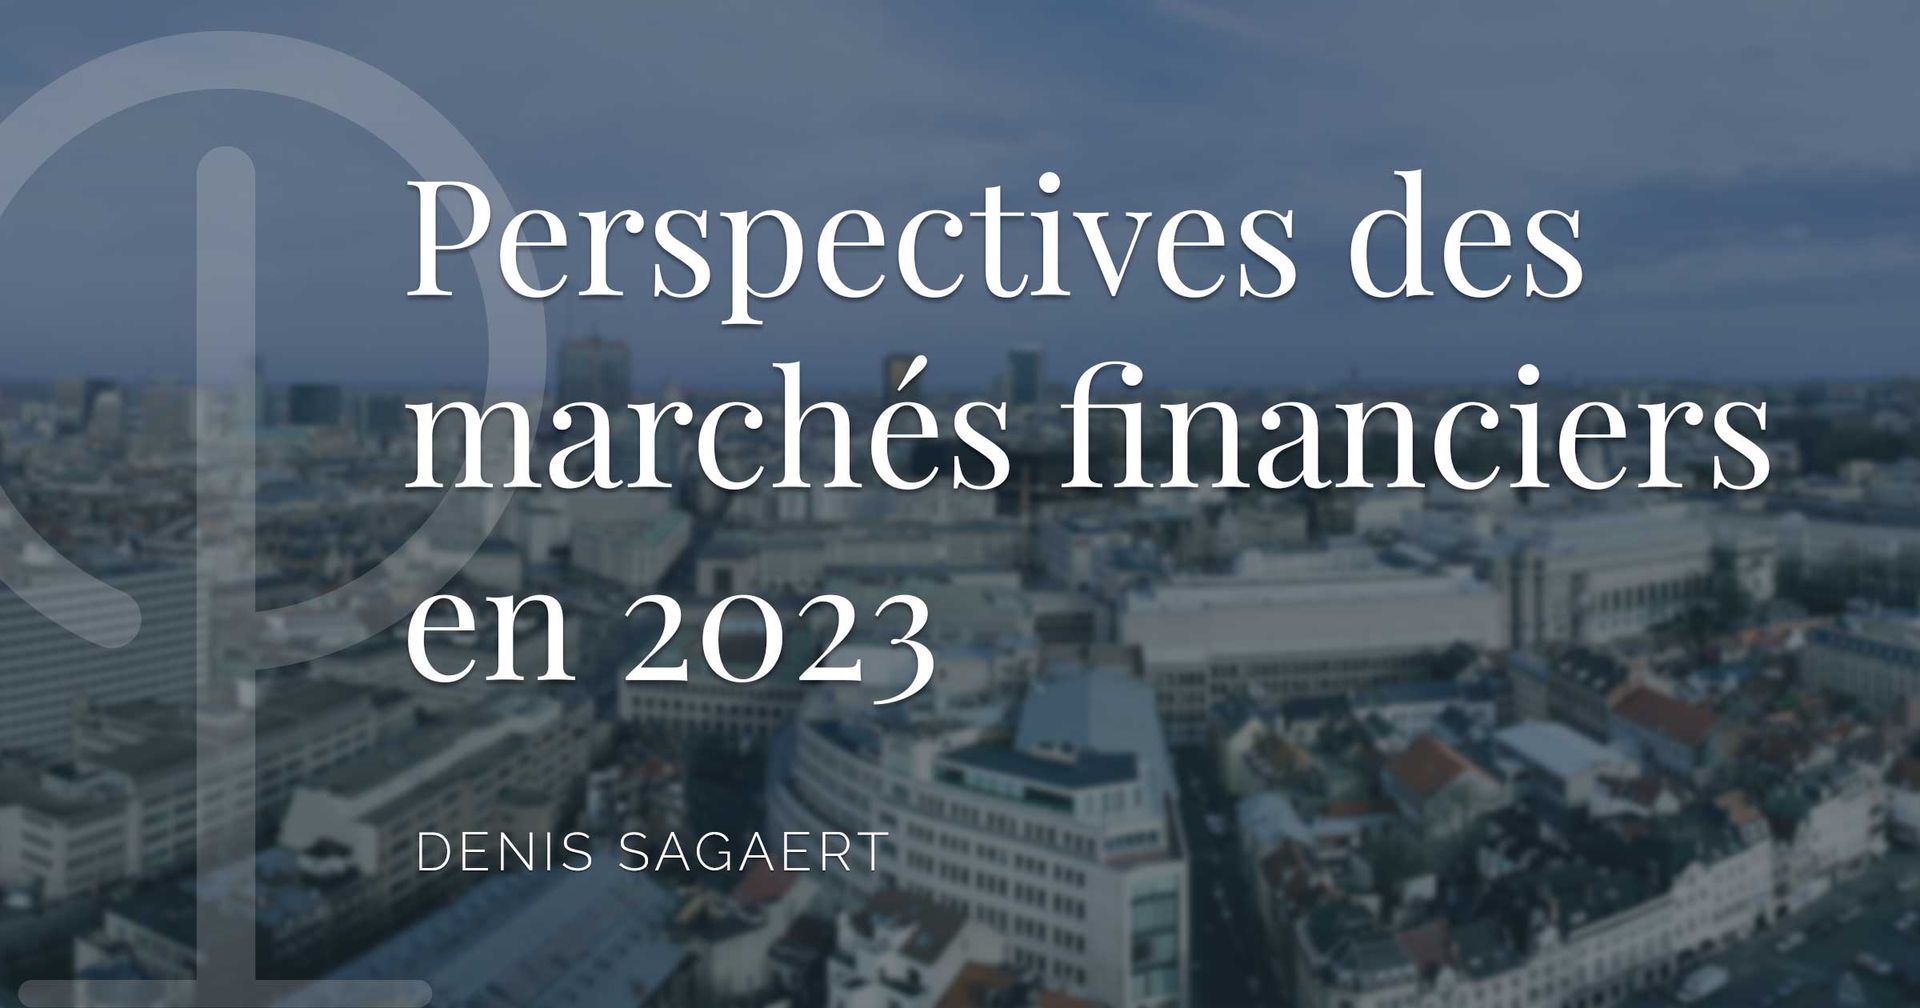 Perspectives des marchés financiers en 2023